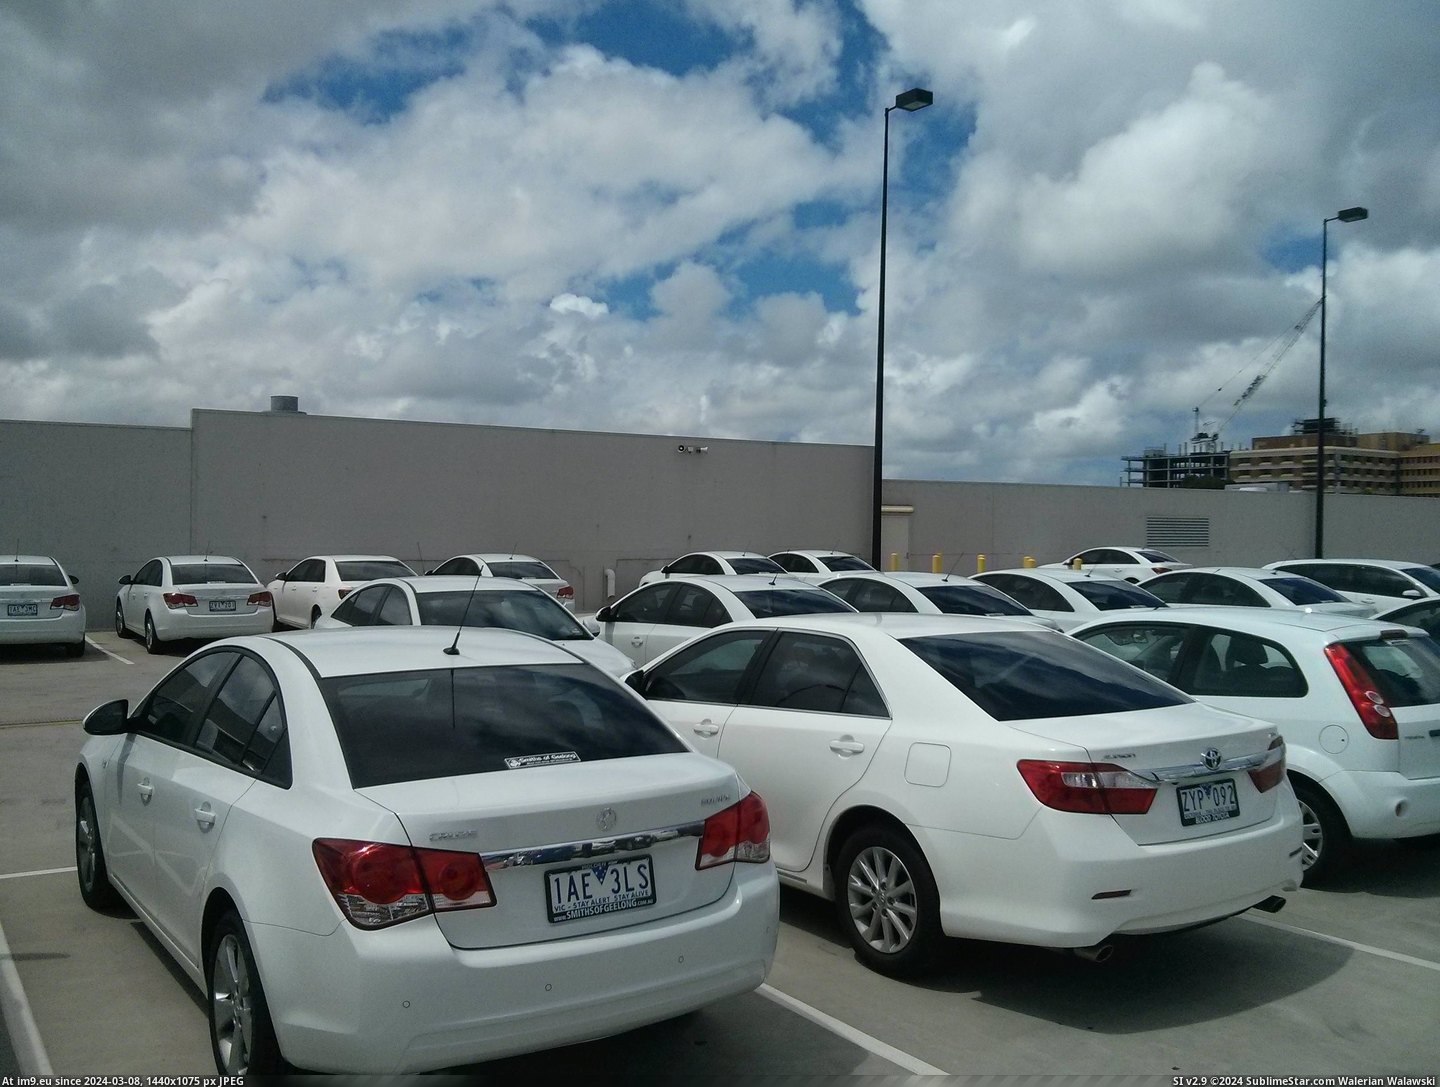 #White #Full #Parked #Carpark #Car #Cars [Mildlyinteresting] I just parked my white car in a carpark full of white cars. Pic. (Изображение из альбом My r/MILDLYINTERESTING favs))